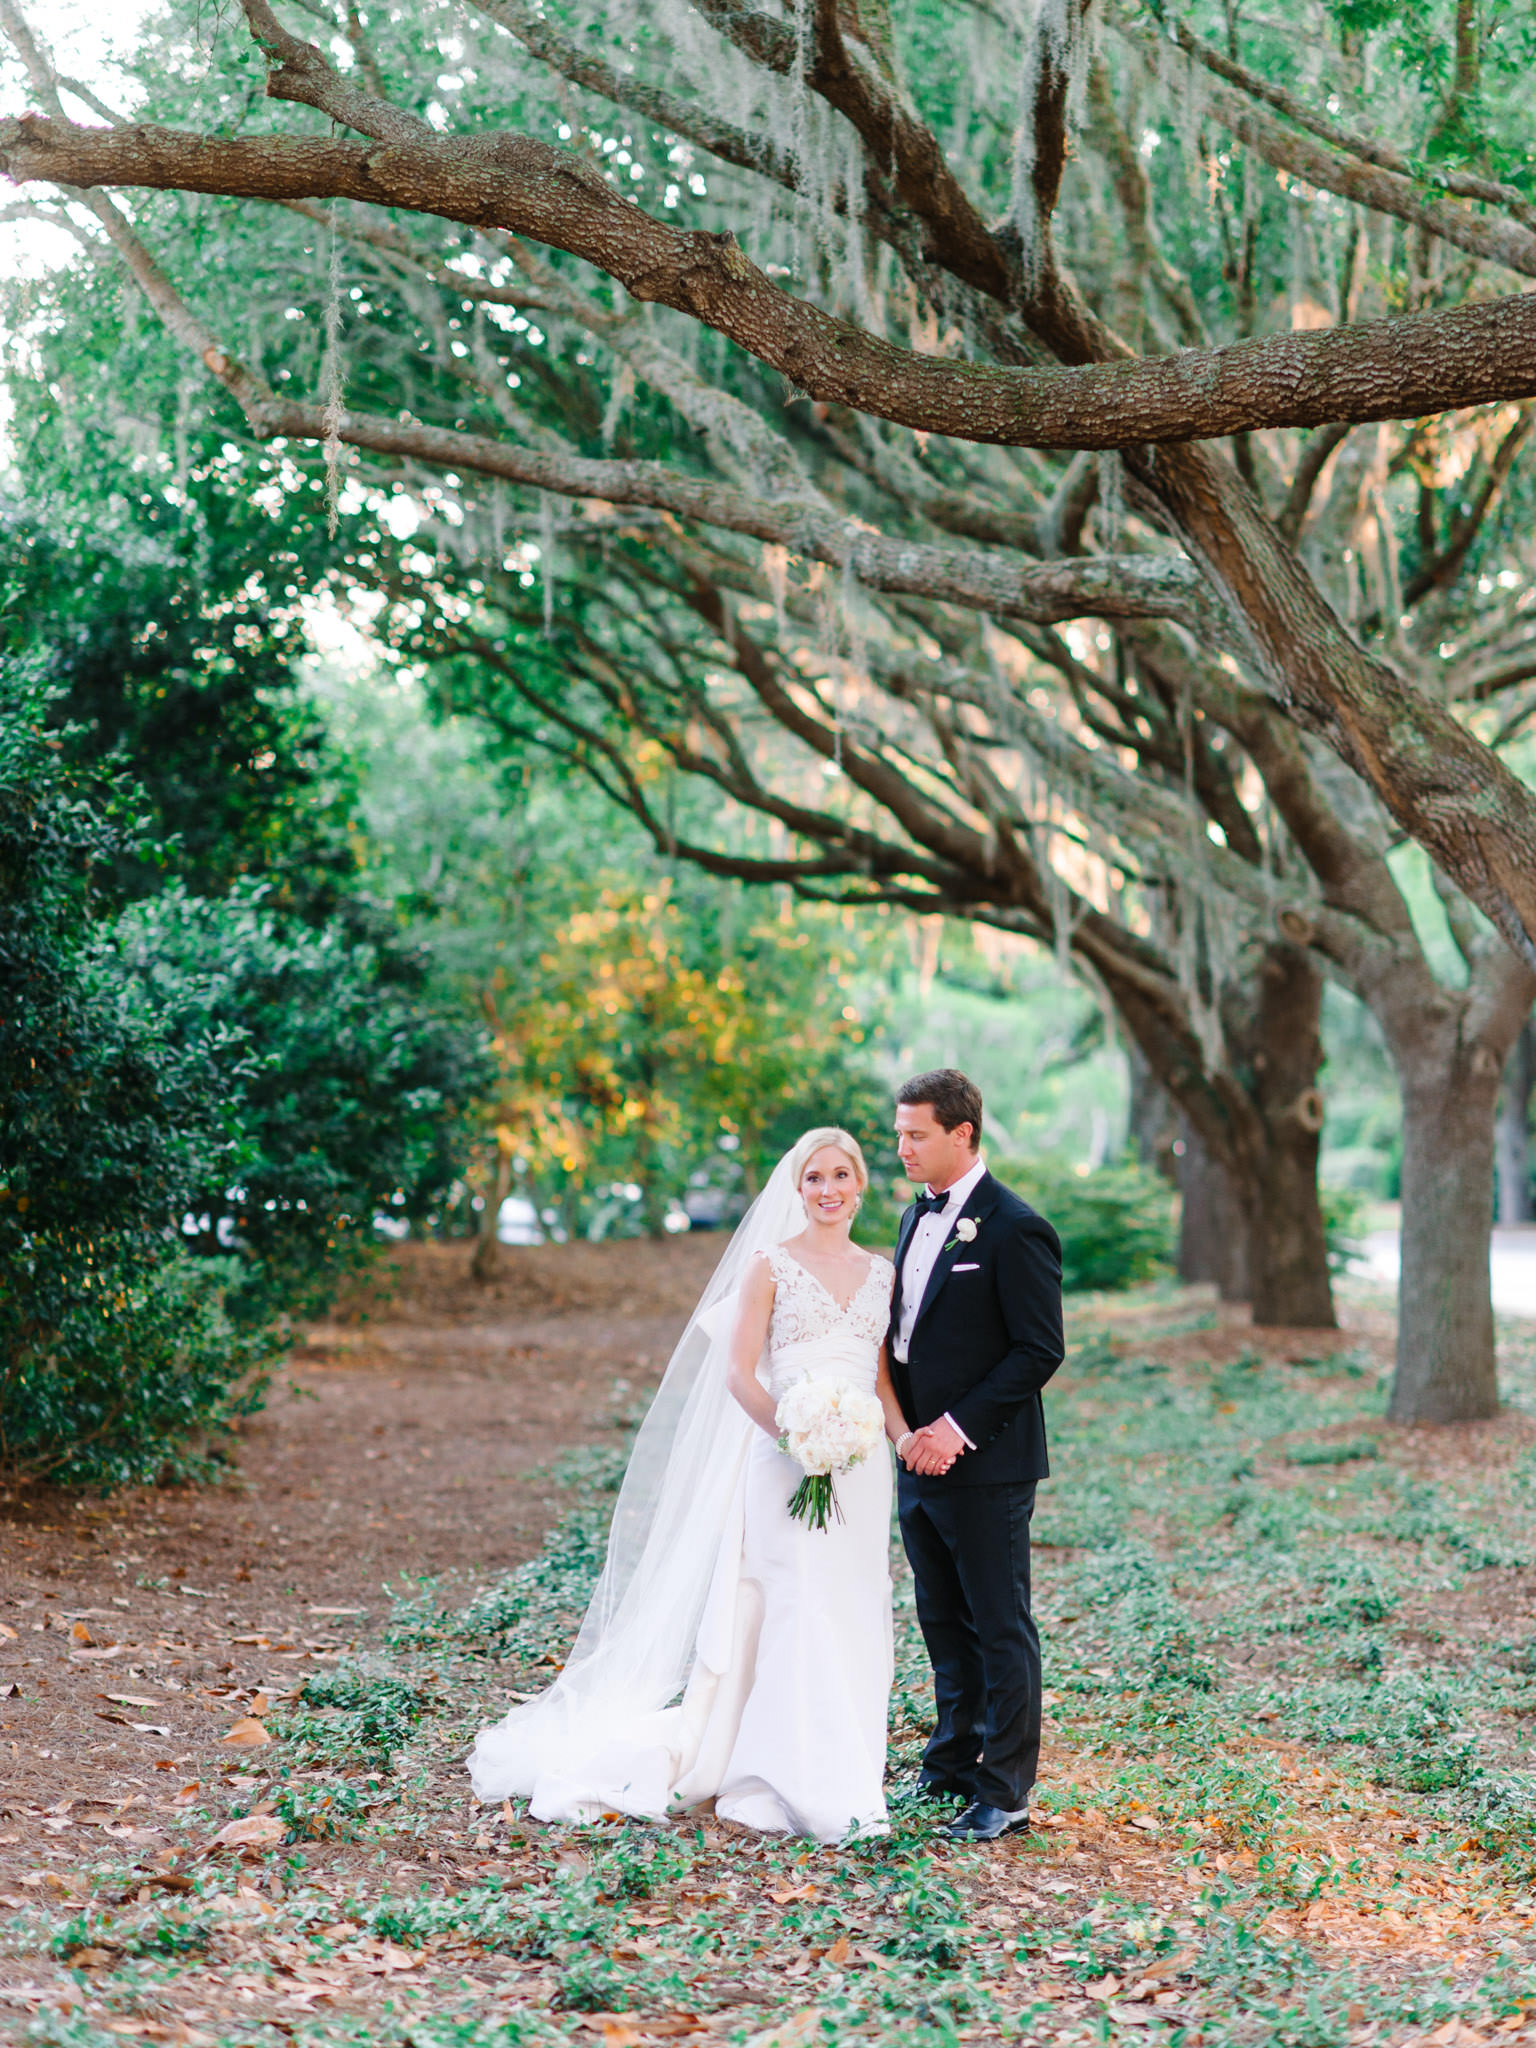 The Best Charleston Wedding Photographer